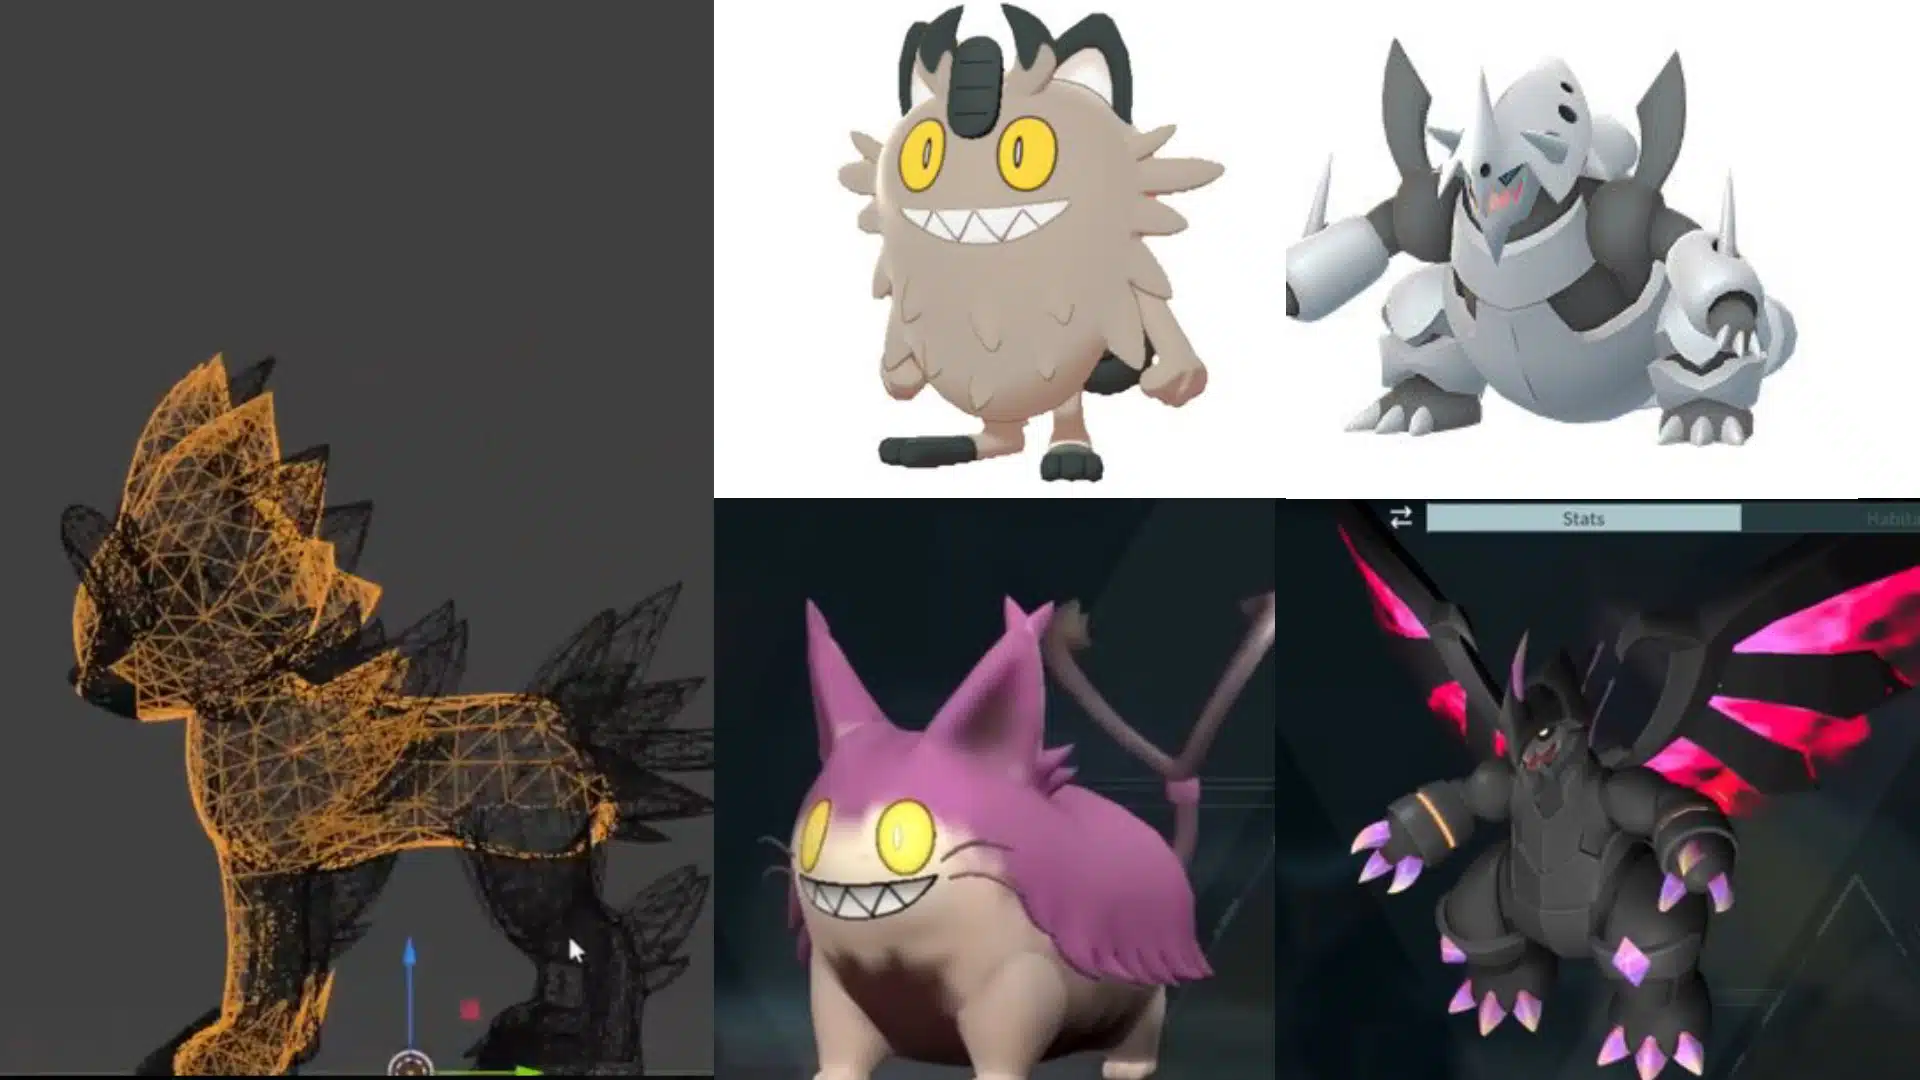 Palworld's Pokemon Similarities Exposed and It's Very Glaring